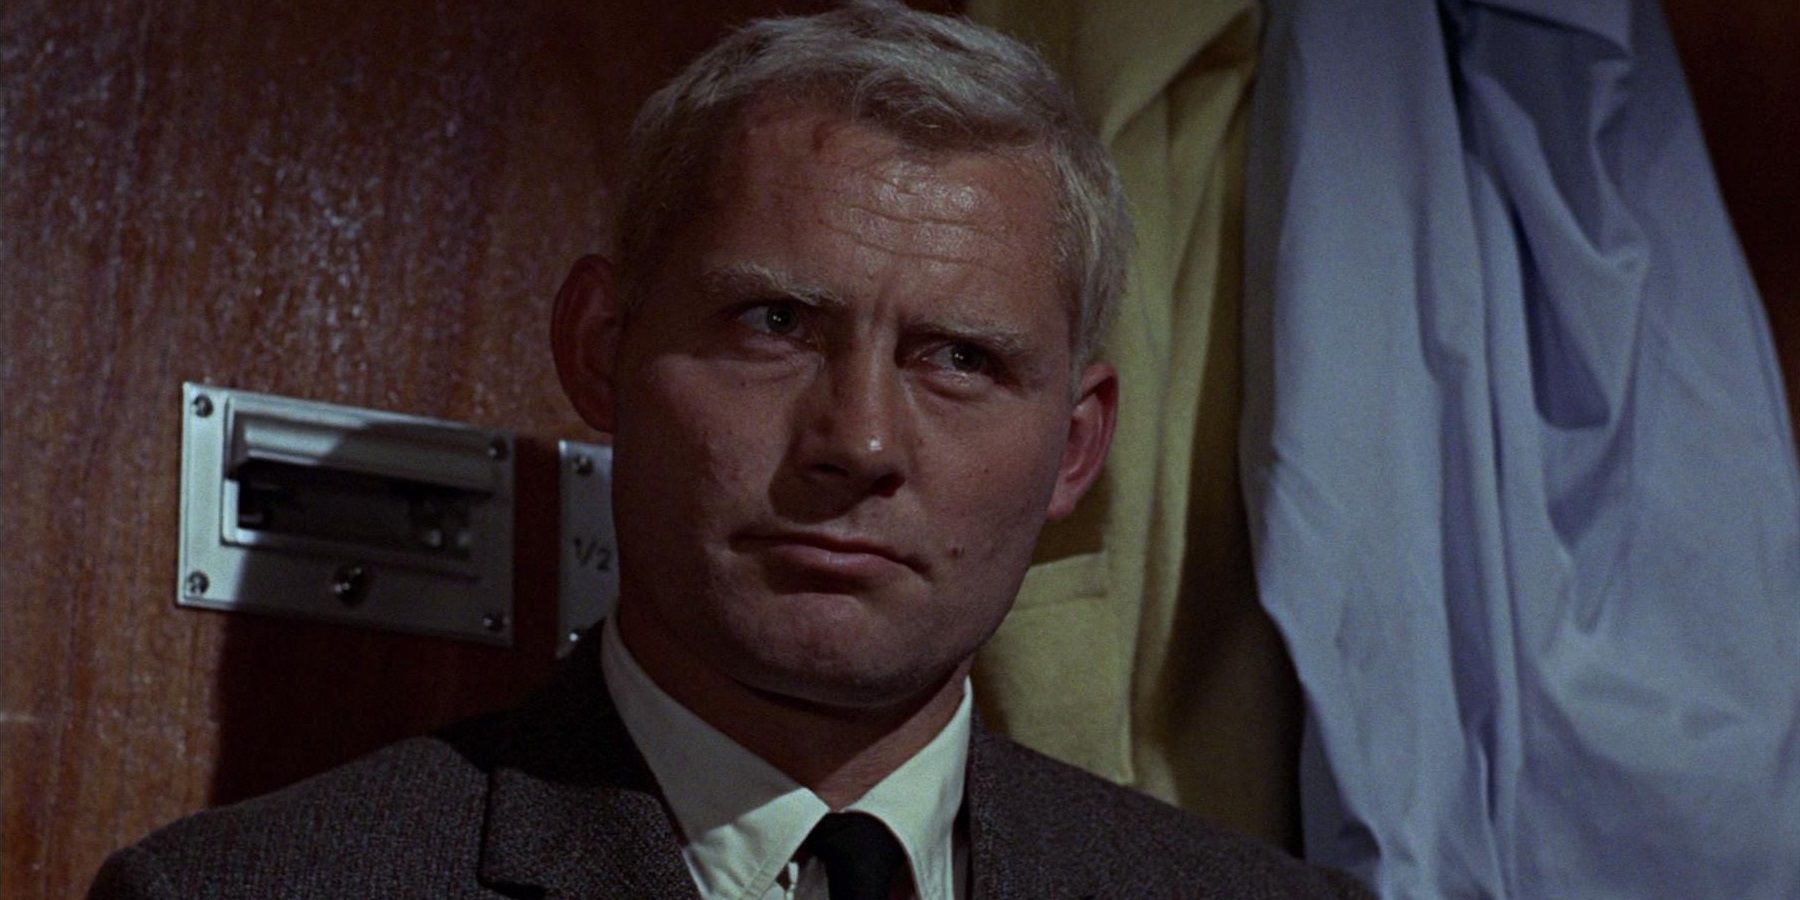 007 The Darkest James Bond Movies Ranked